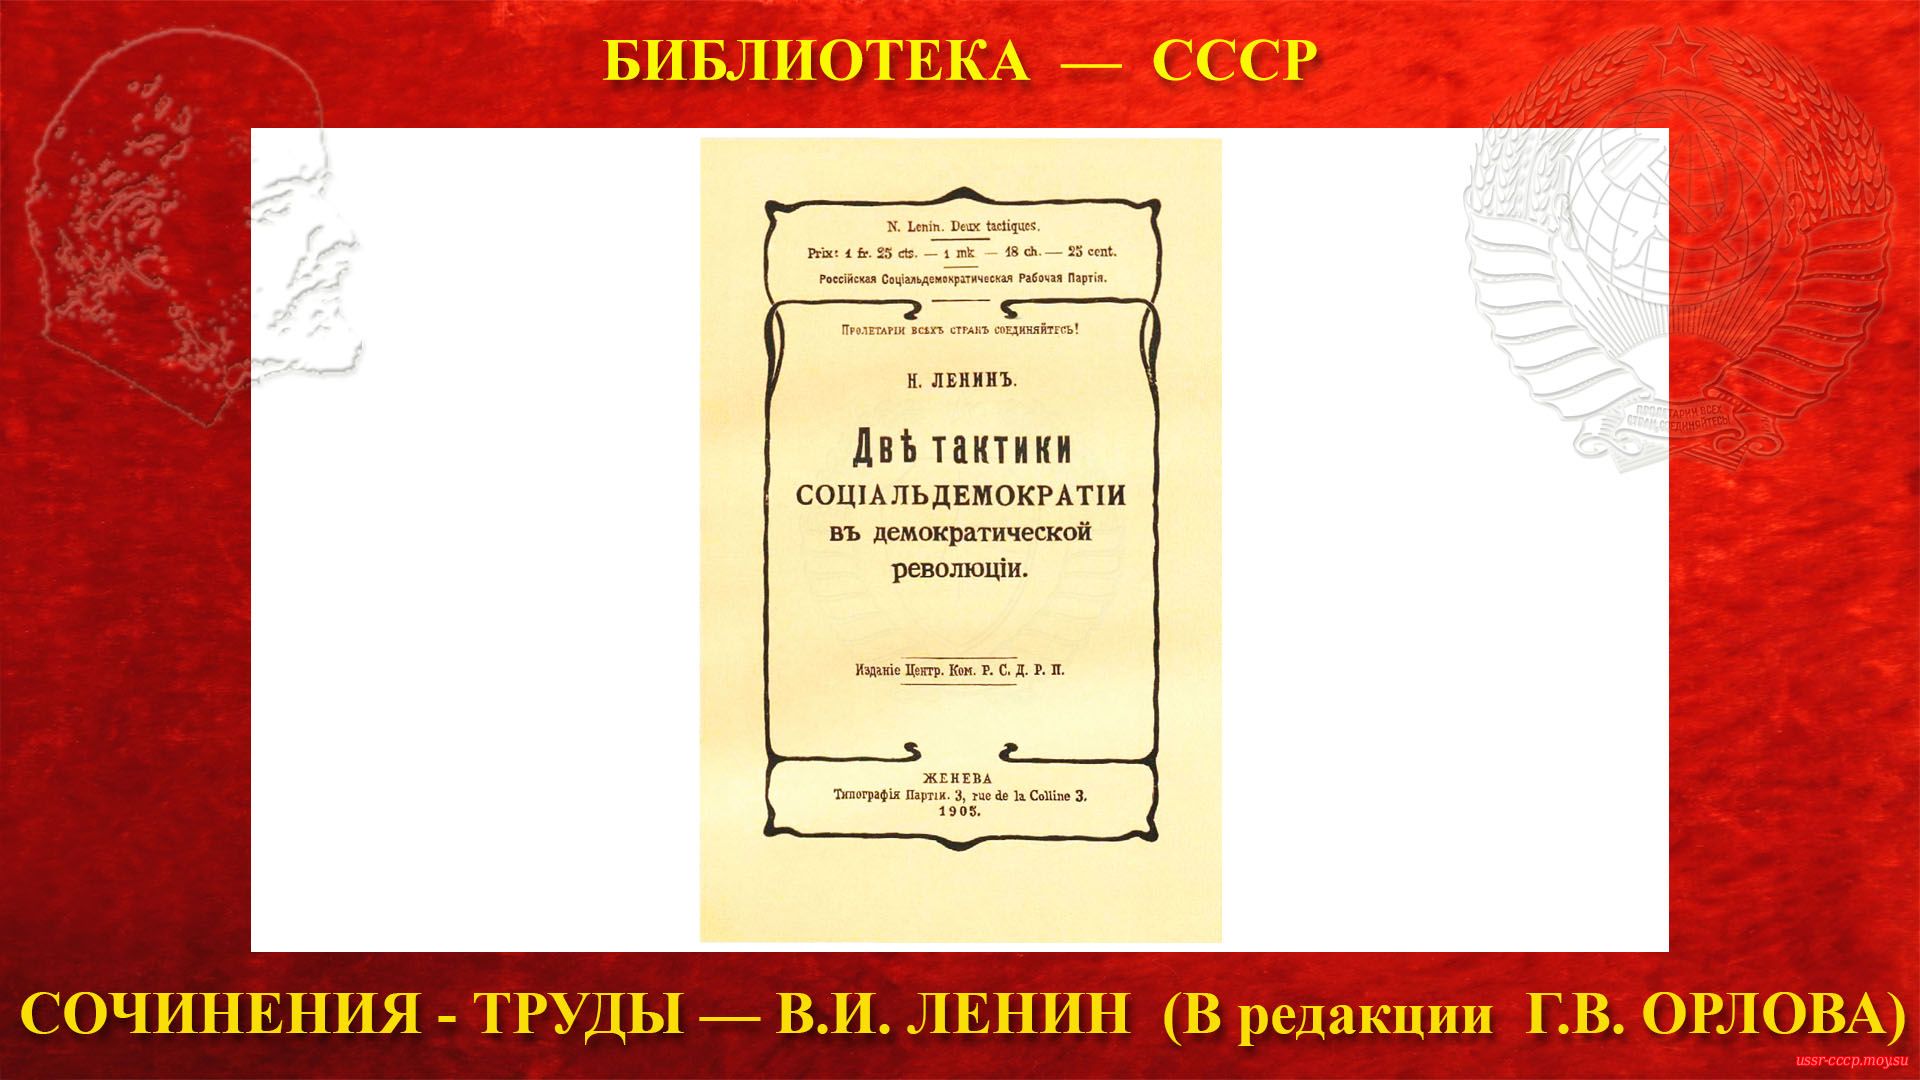 Обложка книги В. И. Ленина «Две тактики социал-демократии в демократической революции». — 1905 г. Уменьшено